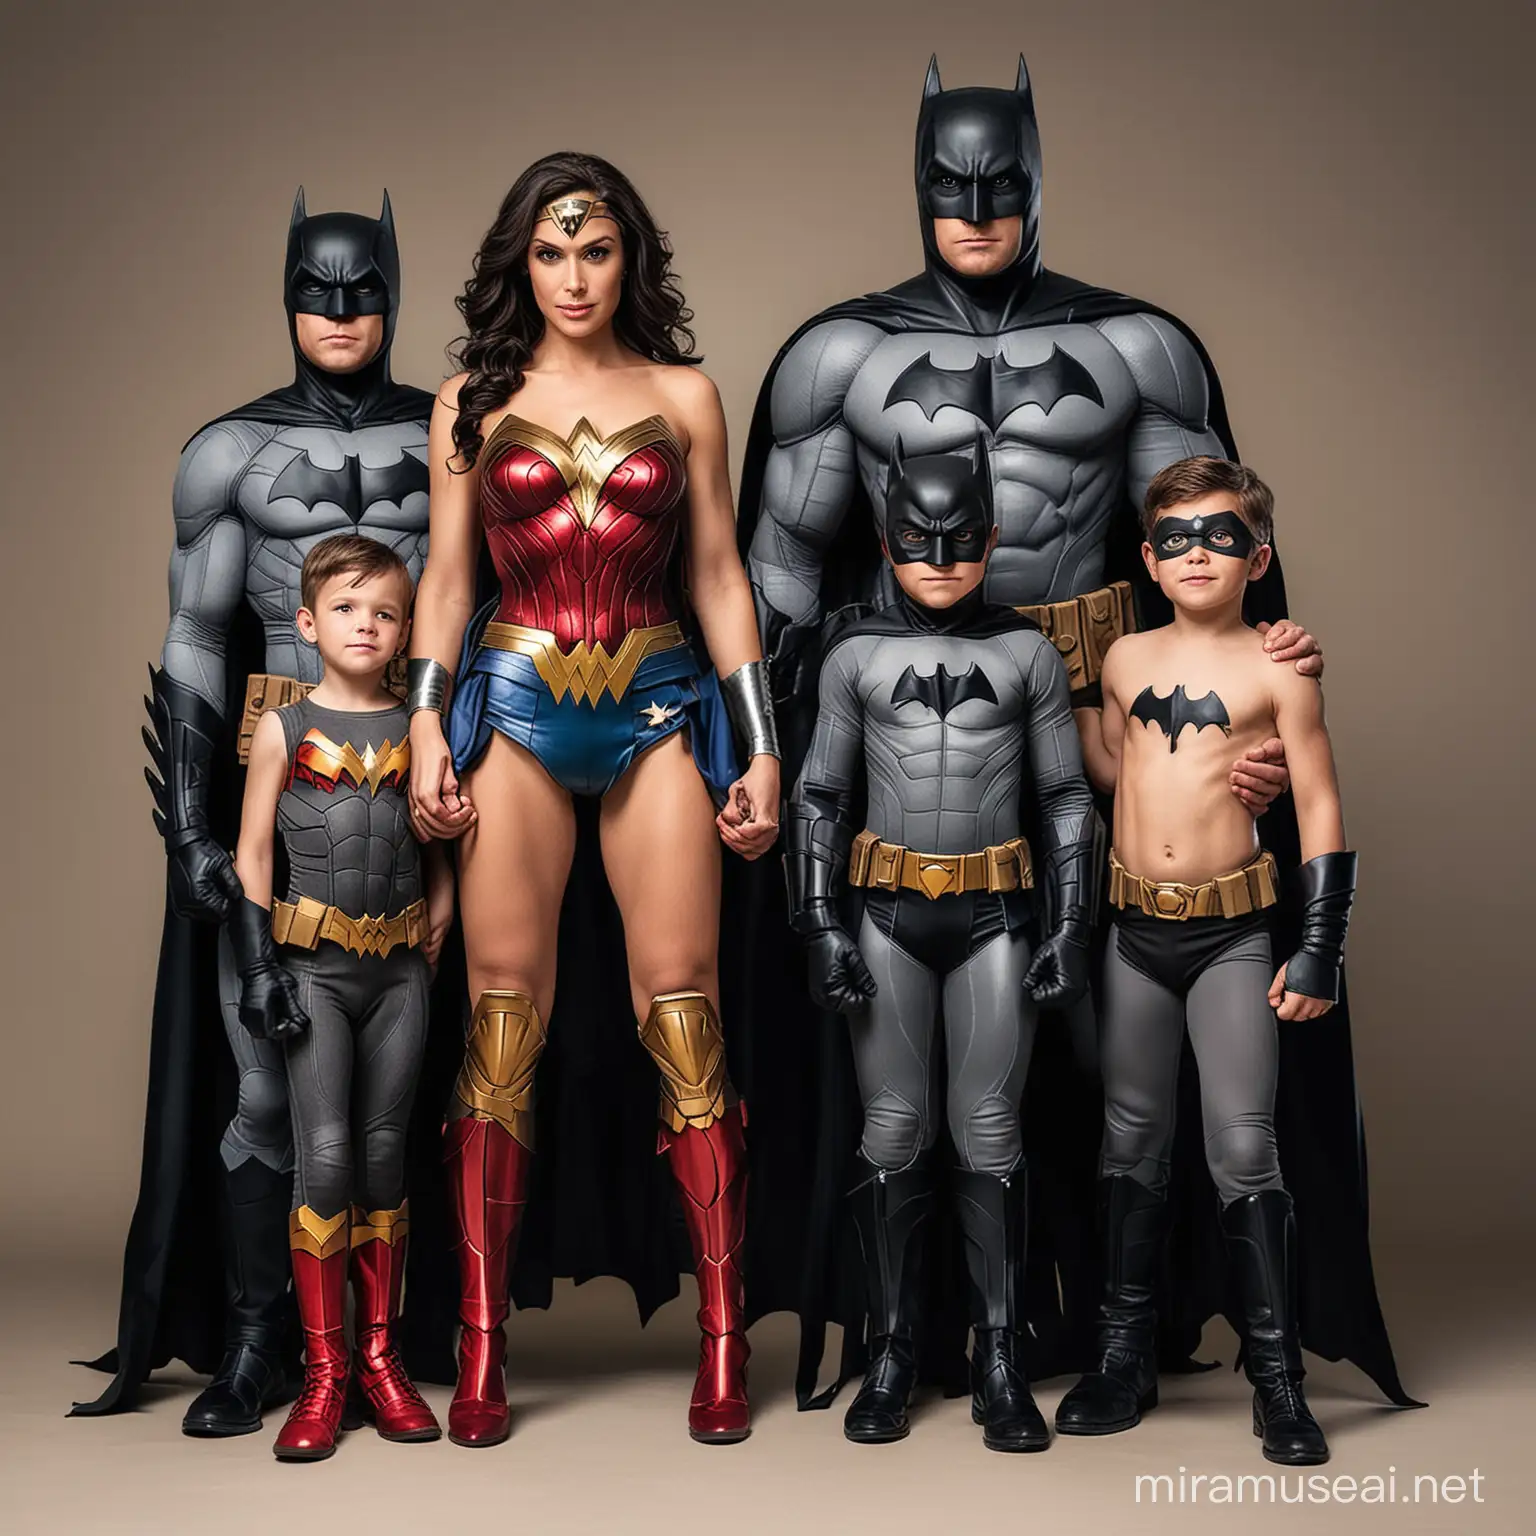 Superhero Family Unites Wonder Woman Mom Batman Dad and Sons in Action